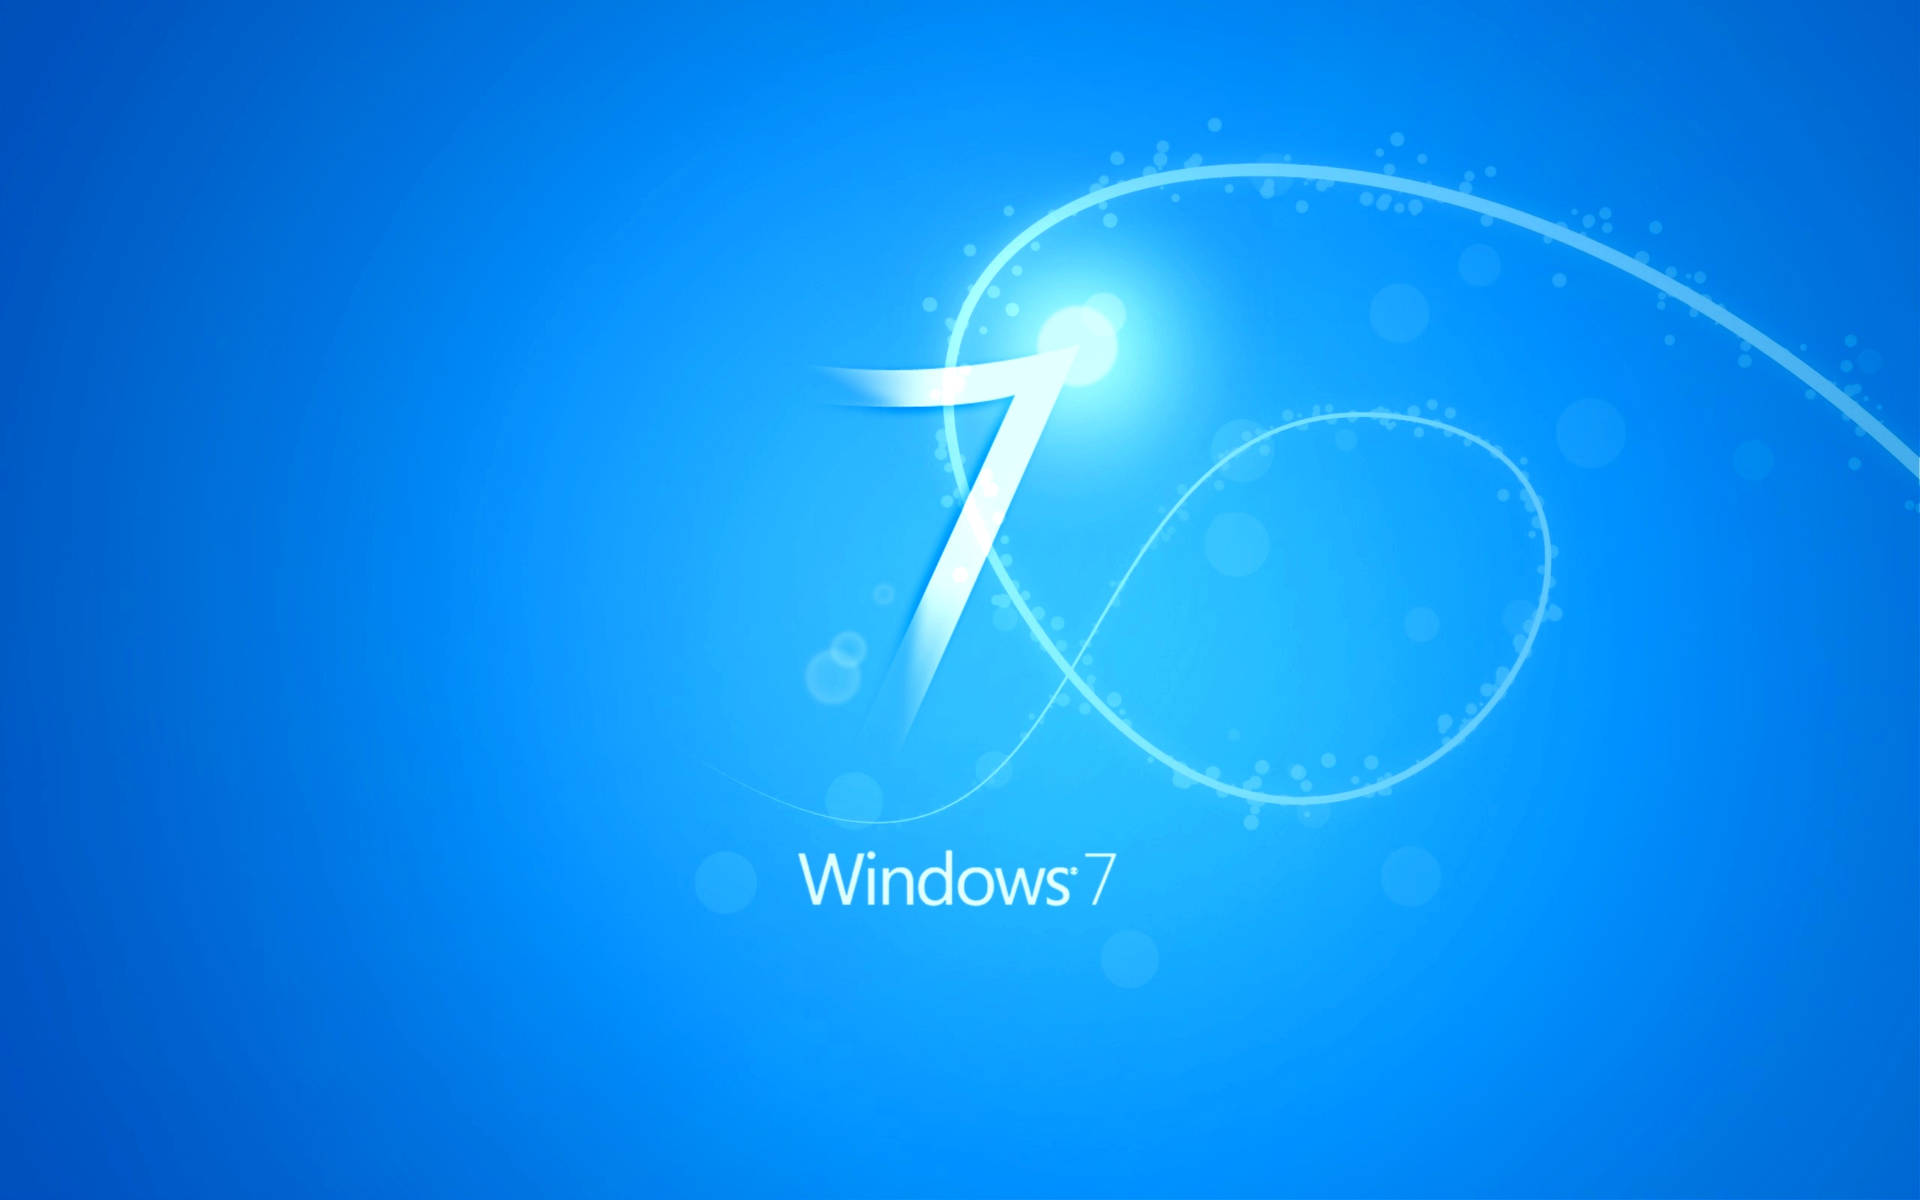 Windows 7 Bright Blue Screen